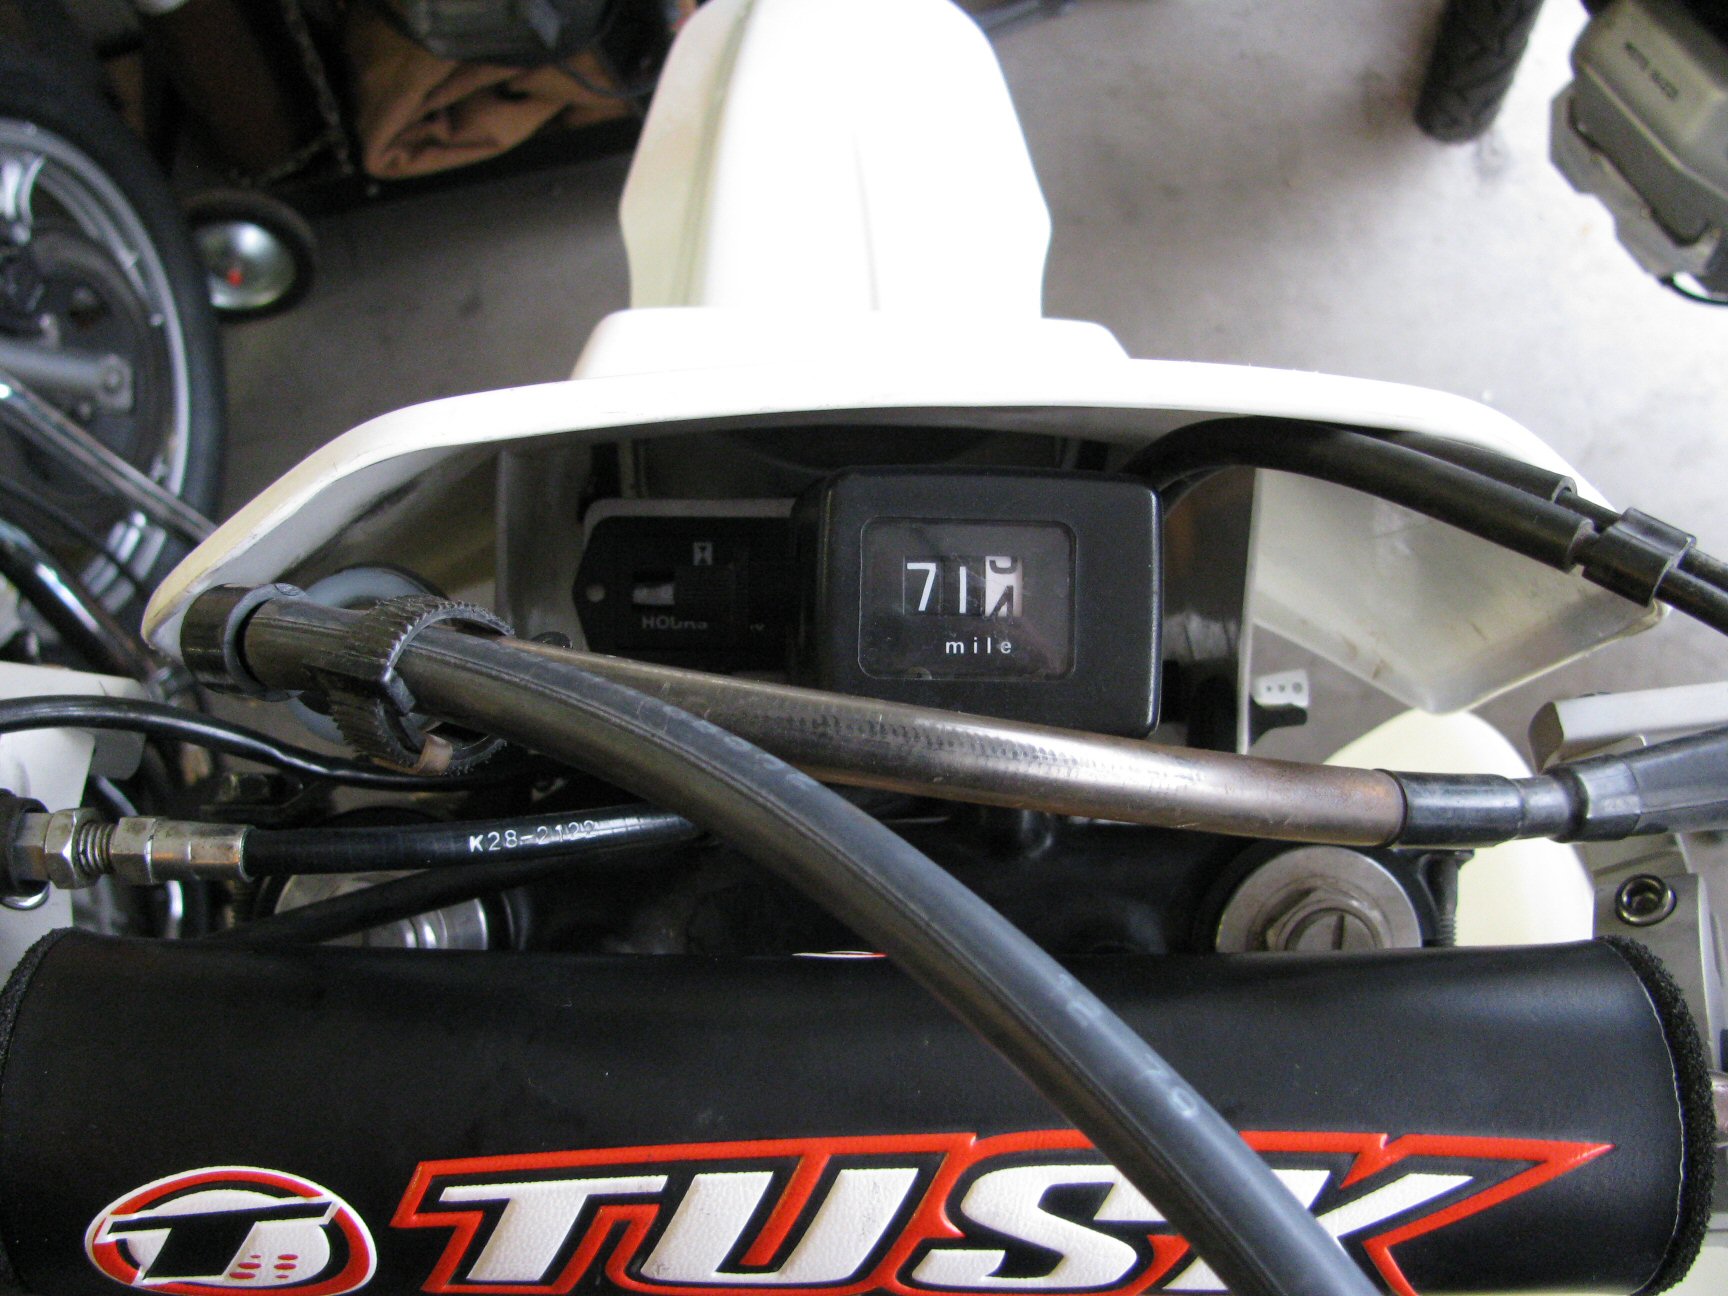 Pro Power Hour Meter installed on a 1993 Suzuki DR350 dirt motorcycle.